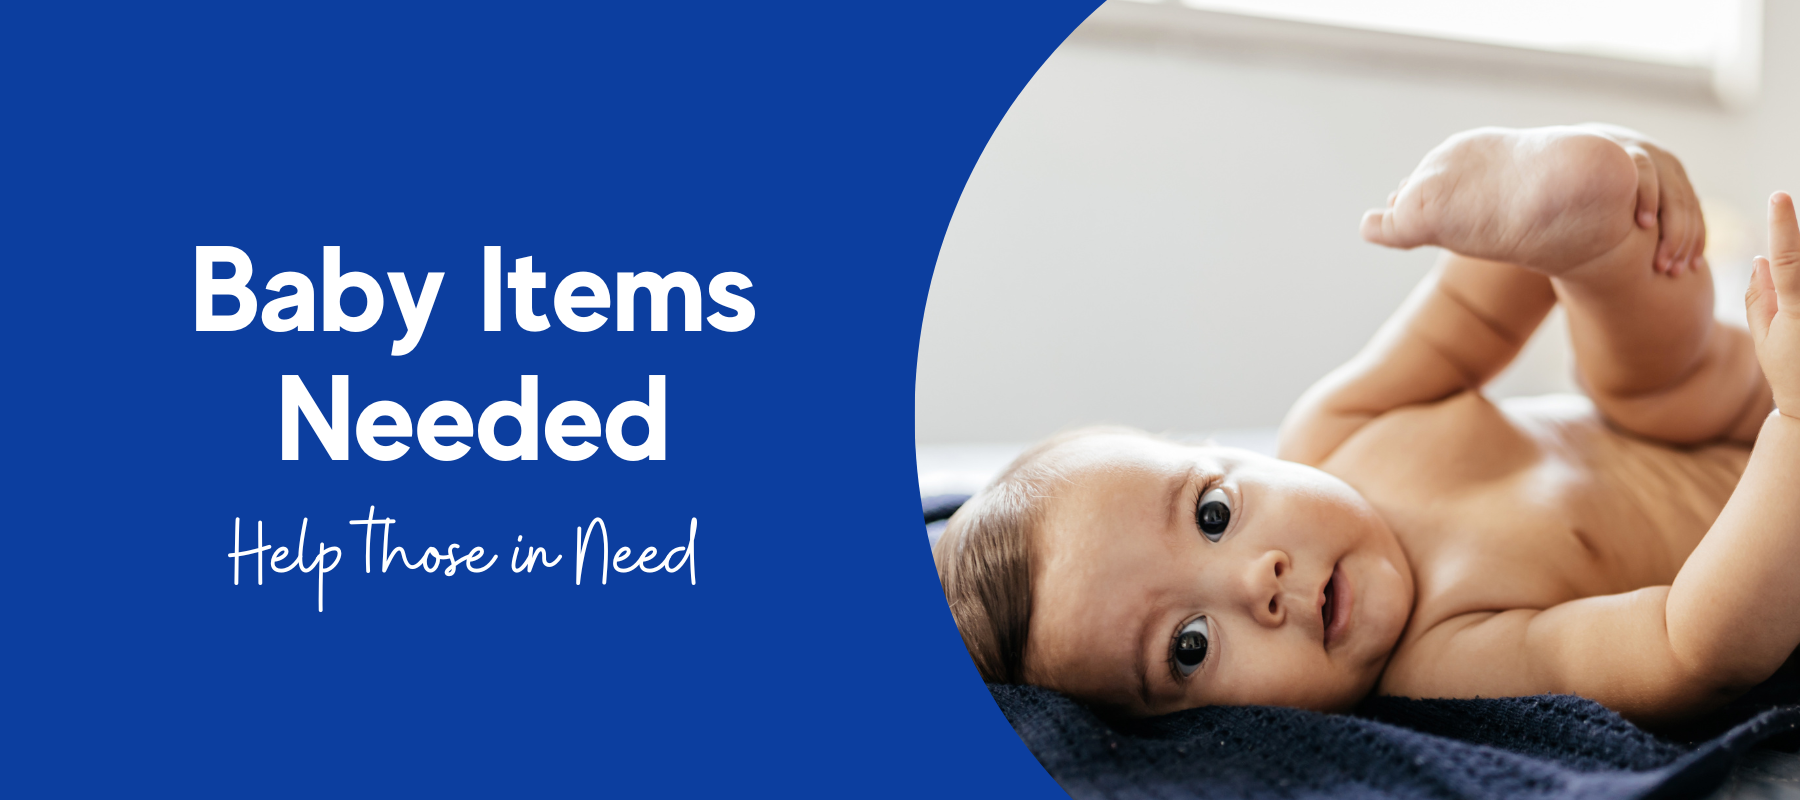 Baby items needed